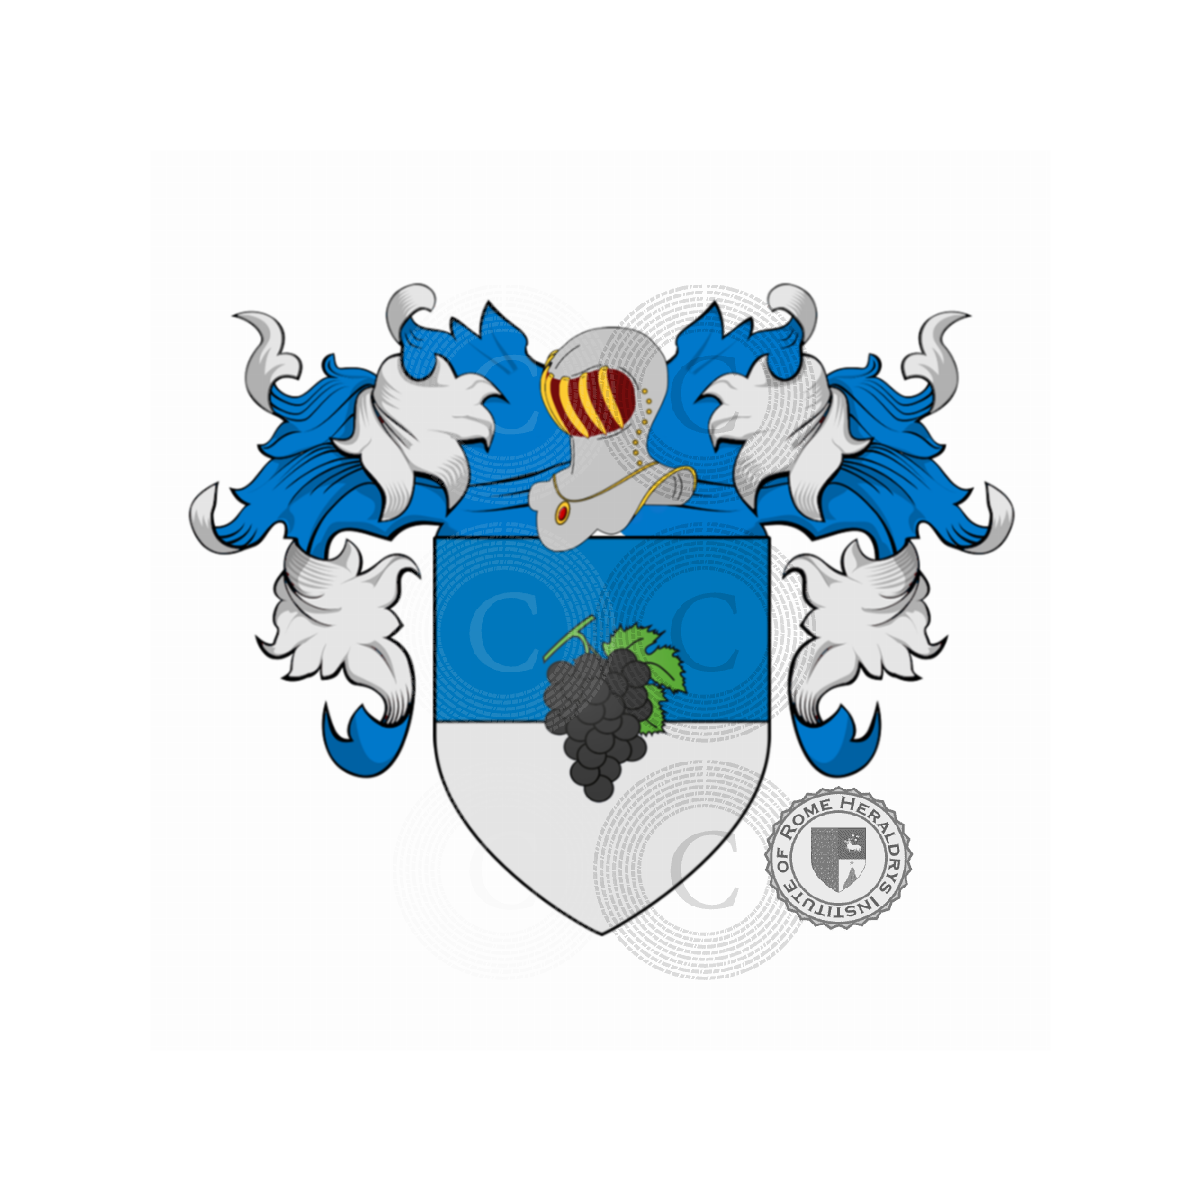 Coat of arms of familyMajoli, Maioli